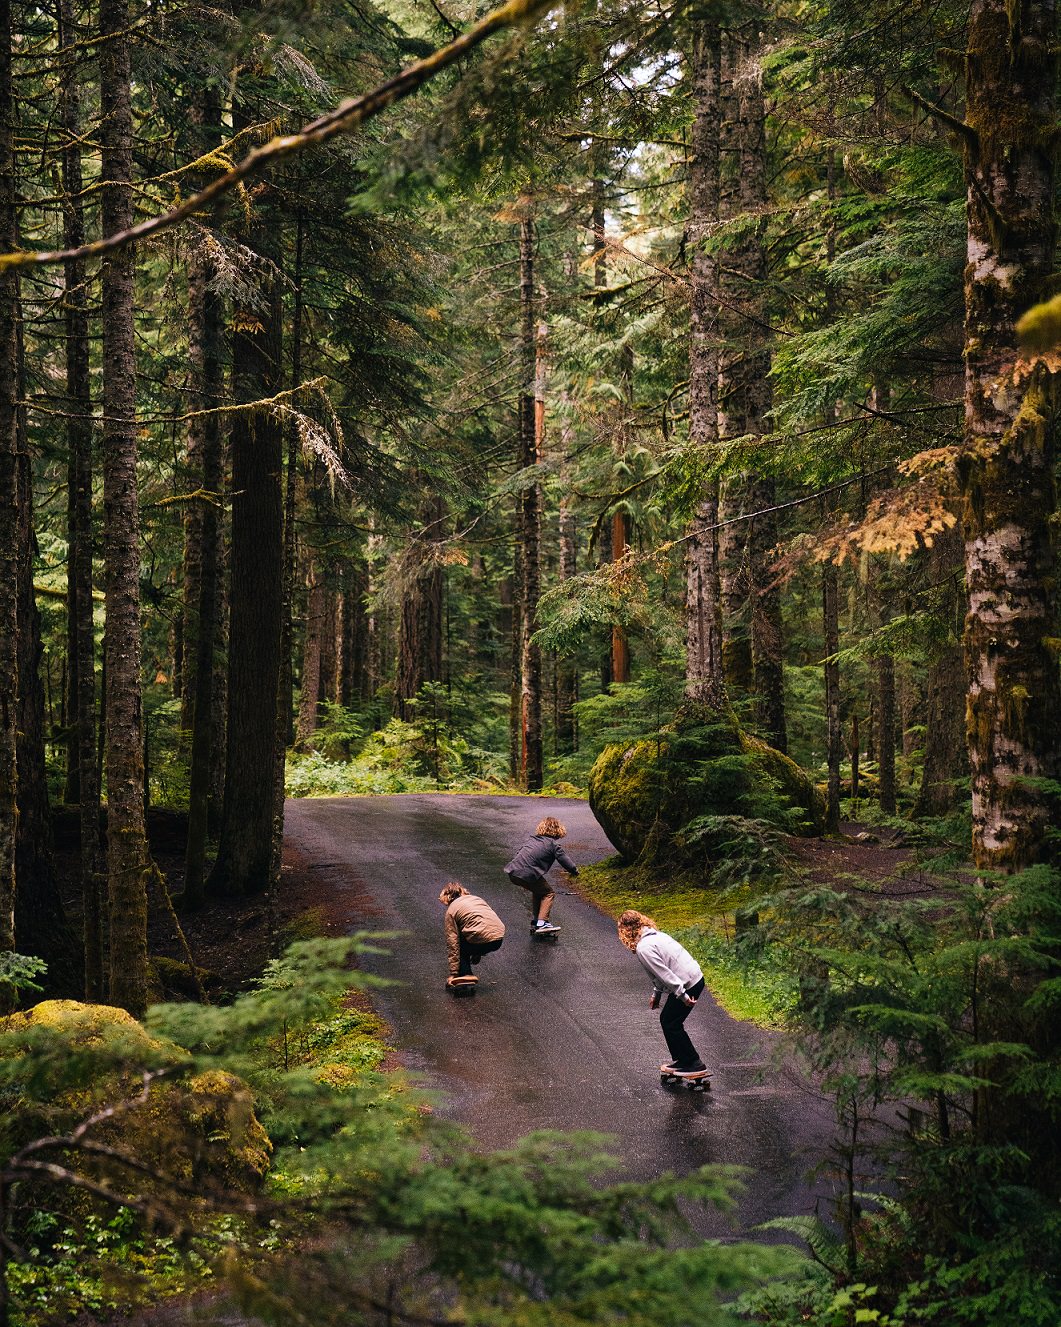 Arbor Skateboards in the Rain by @mattrfoley